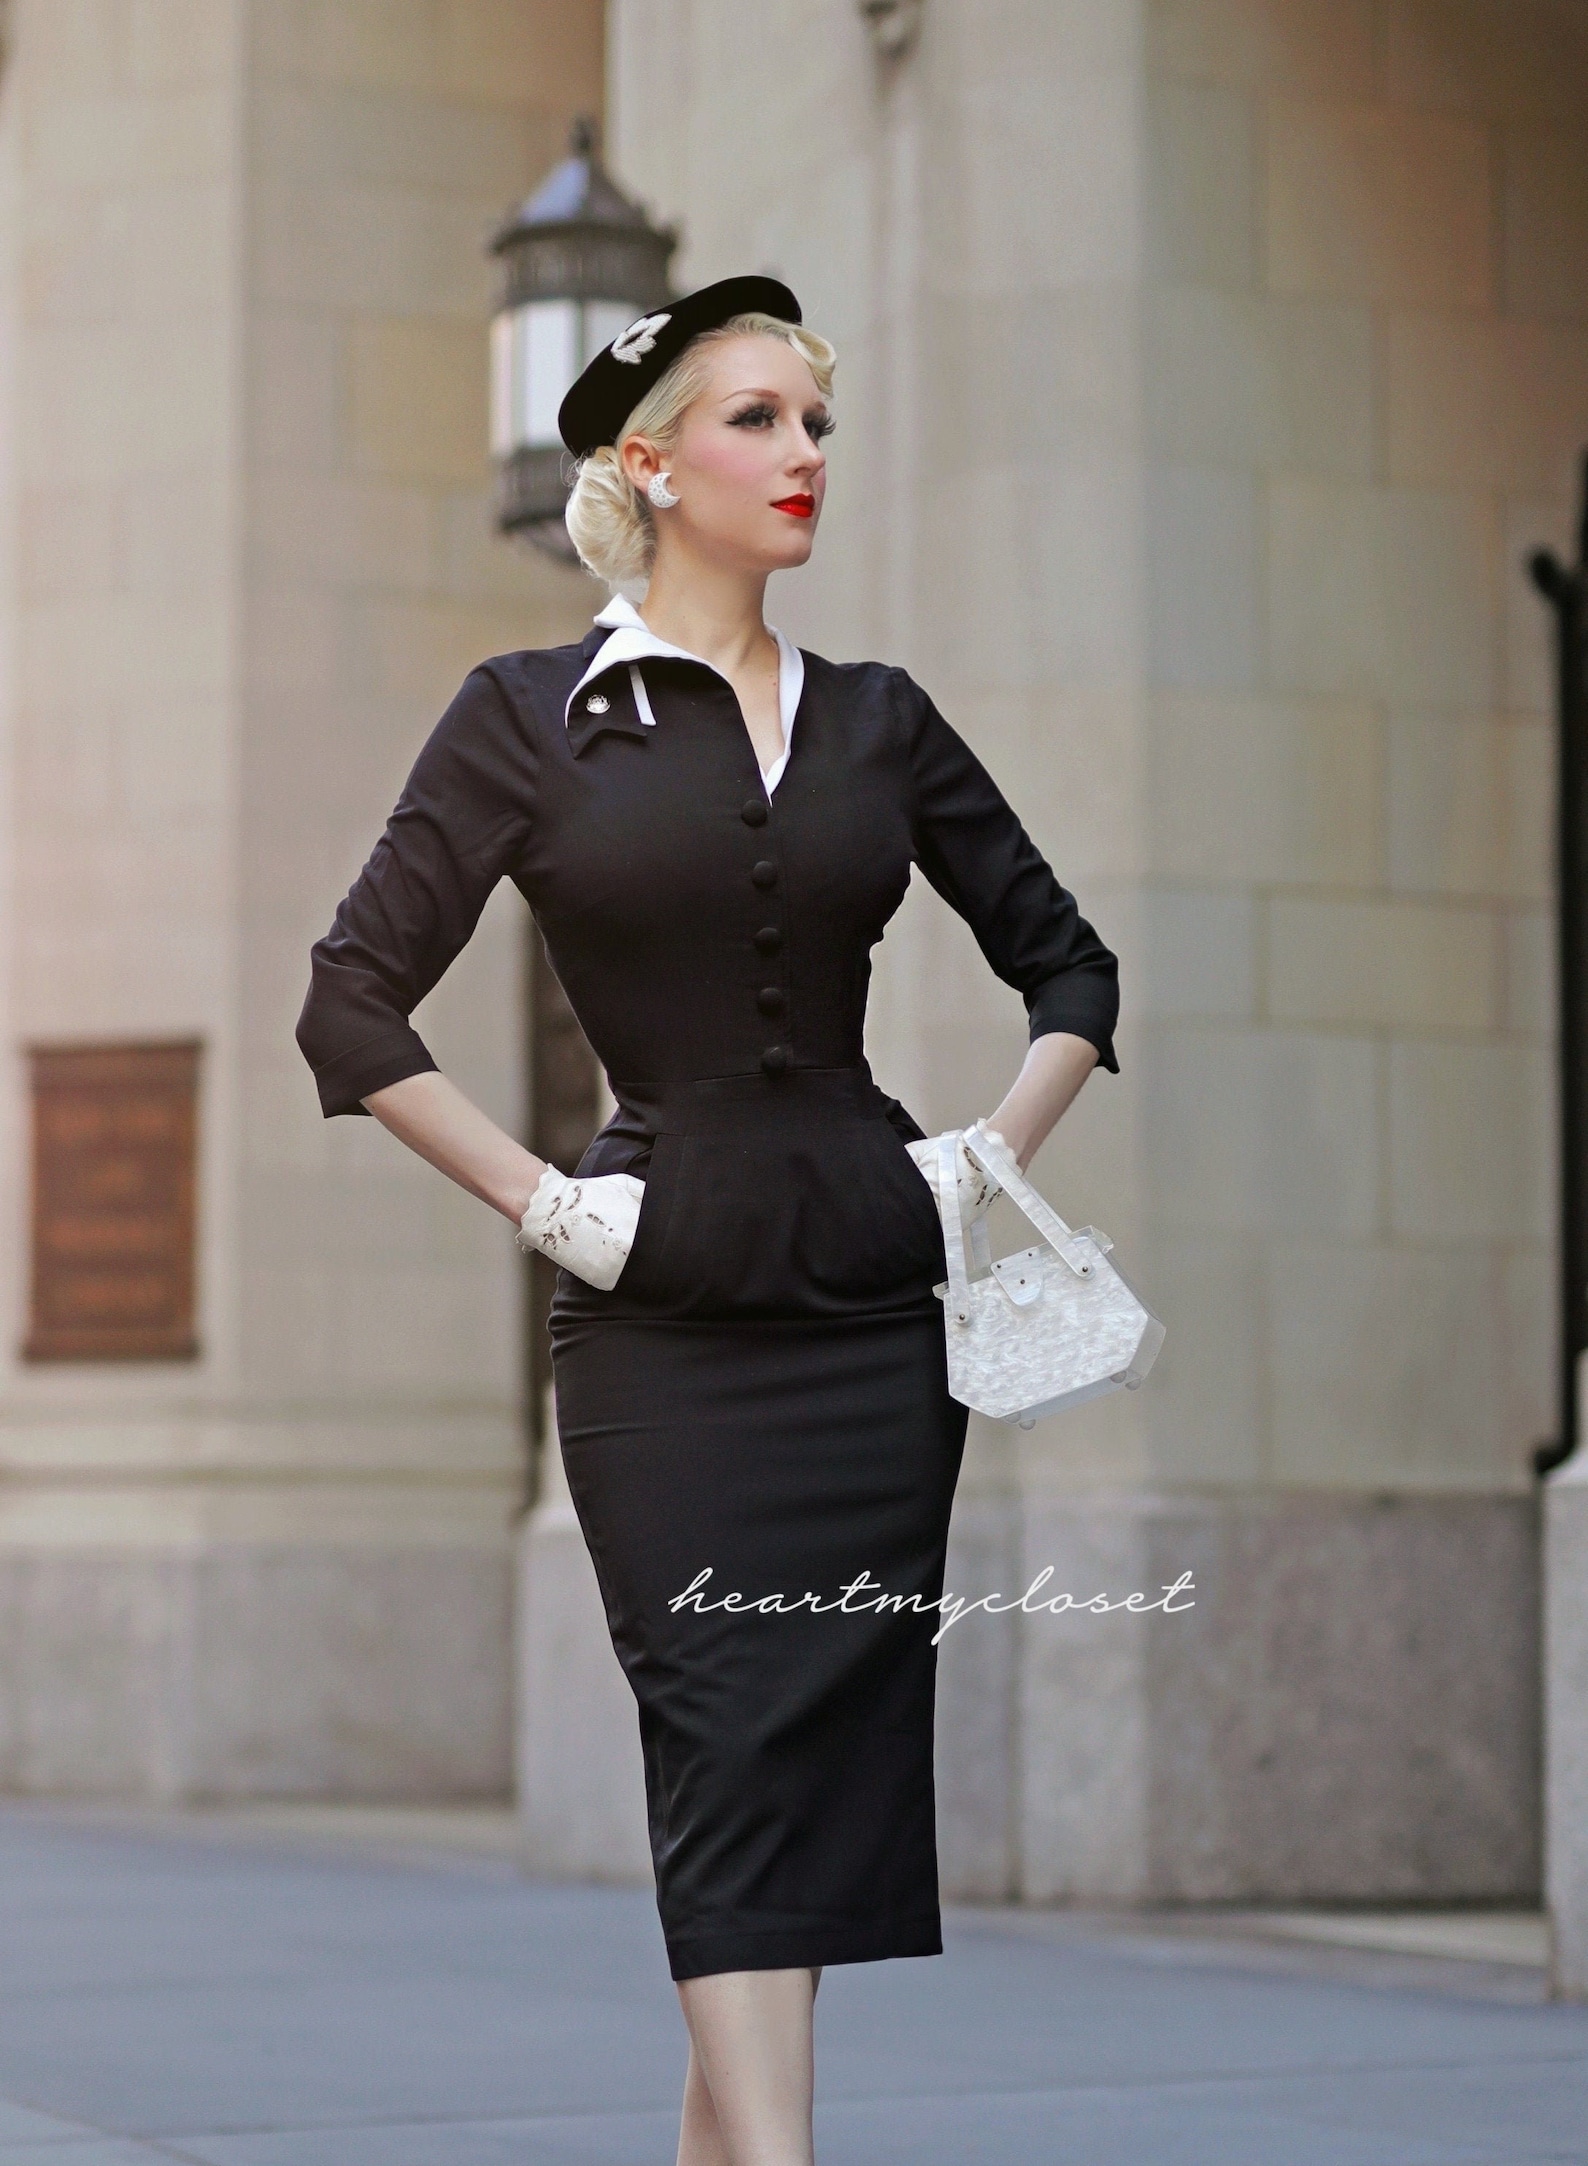 DEVON 1950s Vintage Pattern Dress Pinup Inspired Custom Made - Etsy